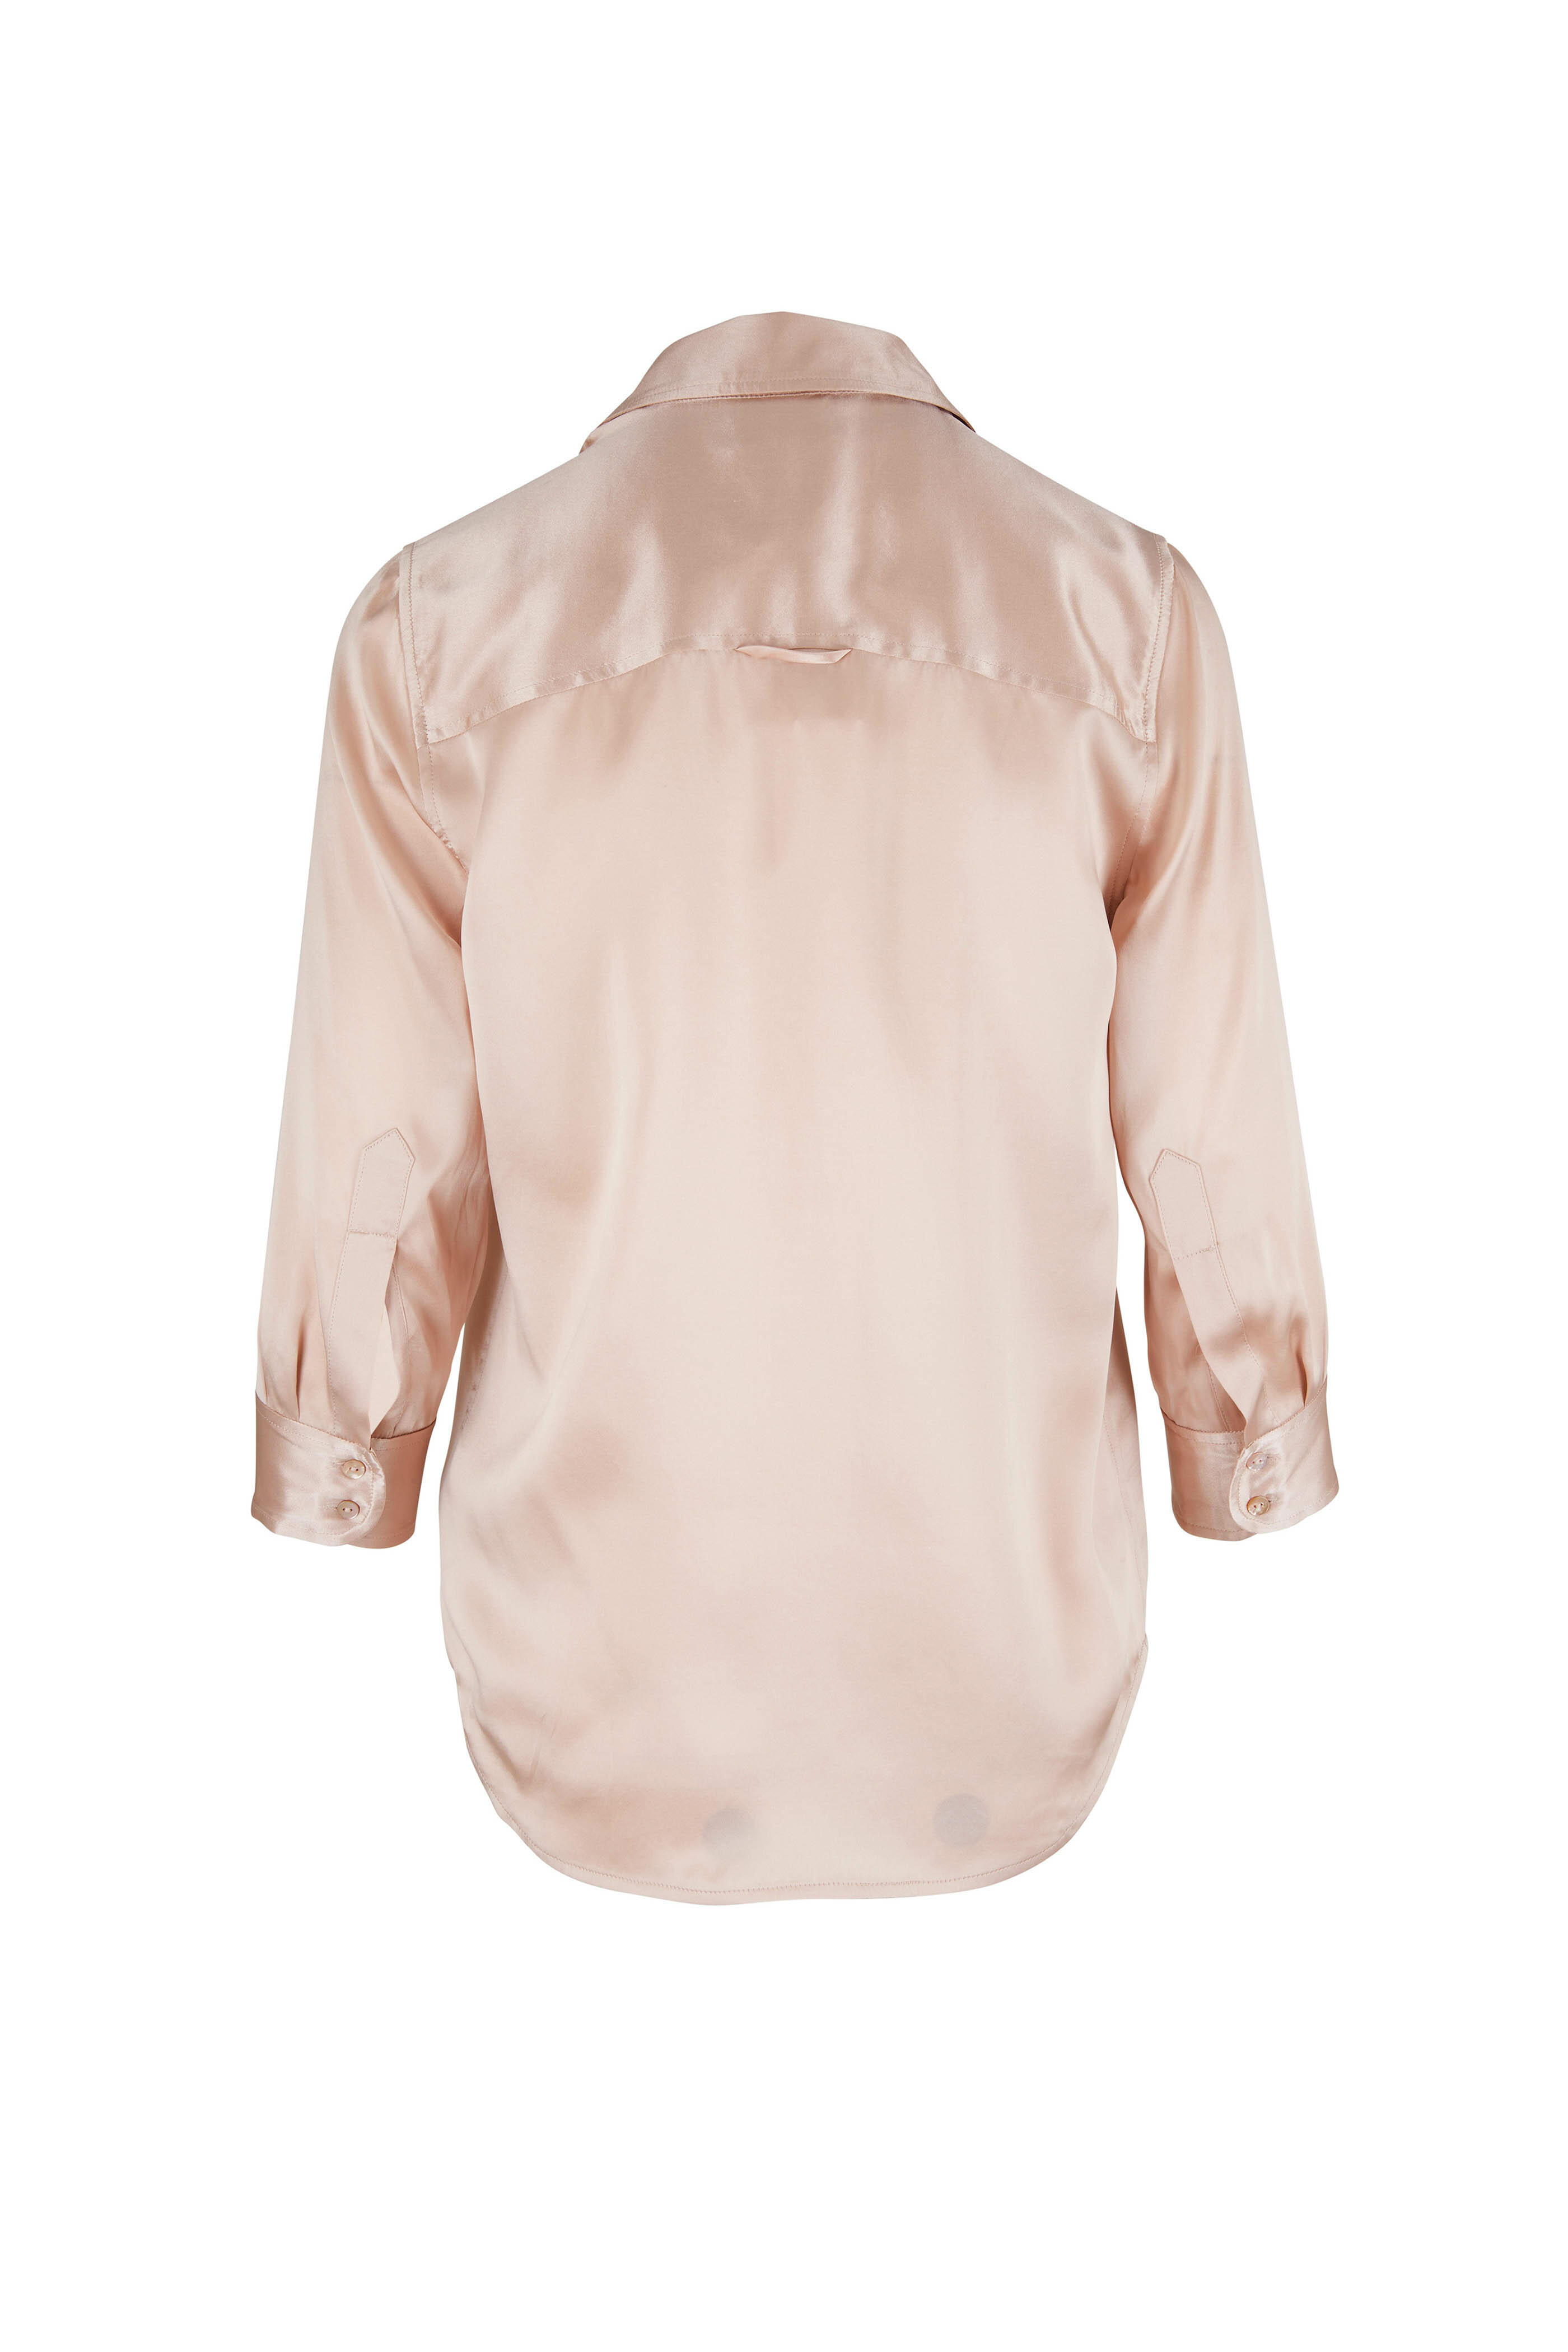 L'Agence - Dani Petal Pink Silk Three-Quarter Sleeve Blouse